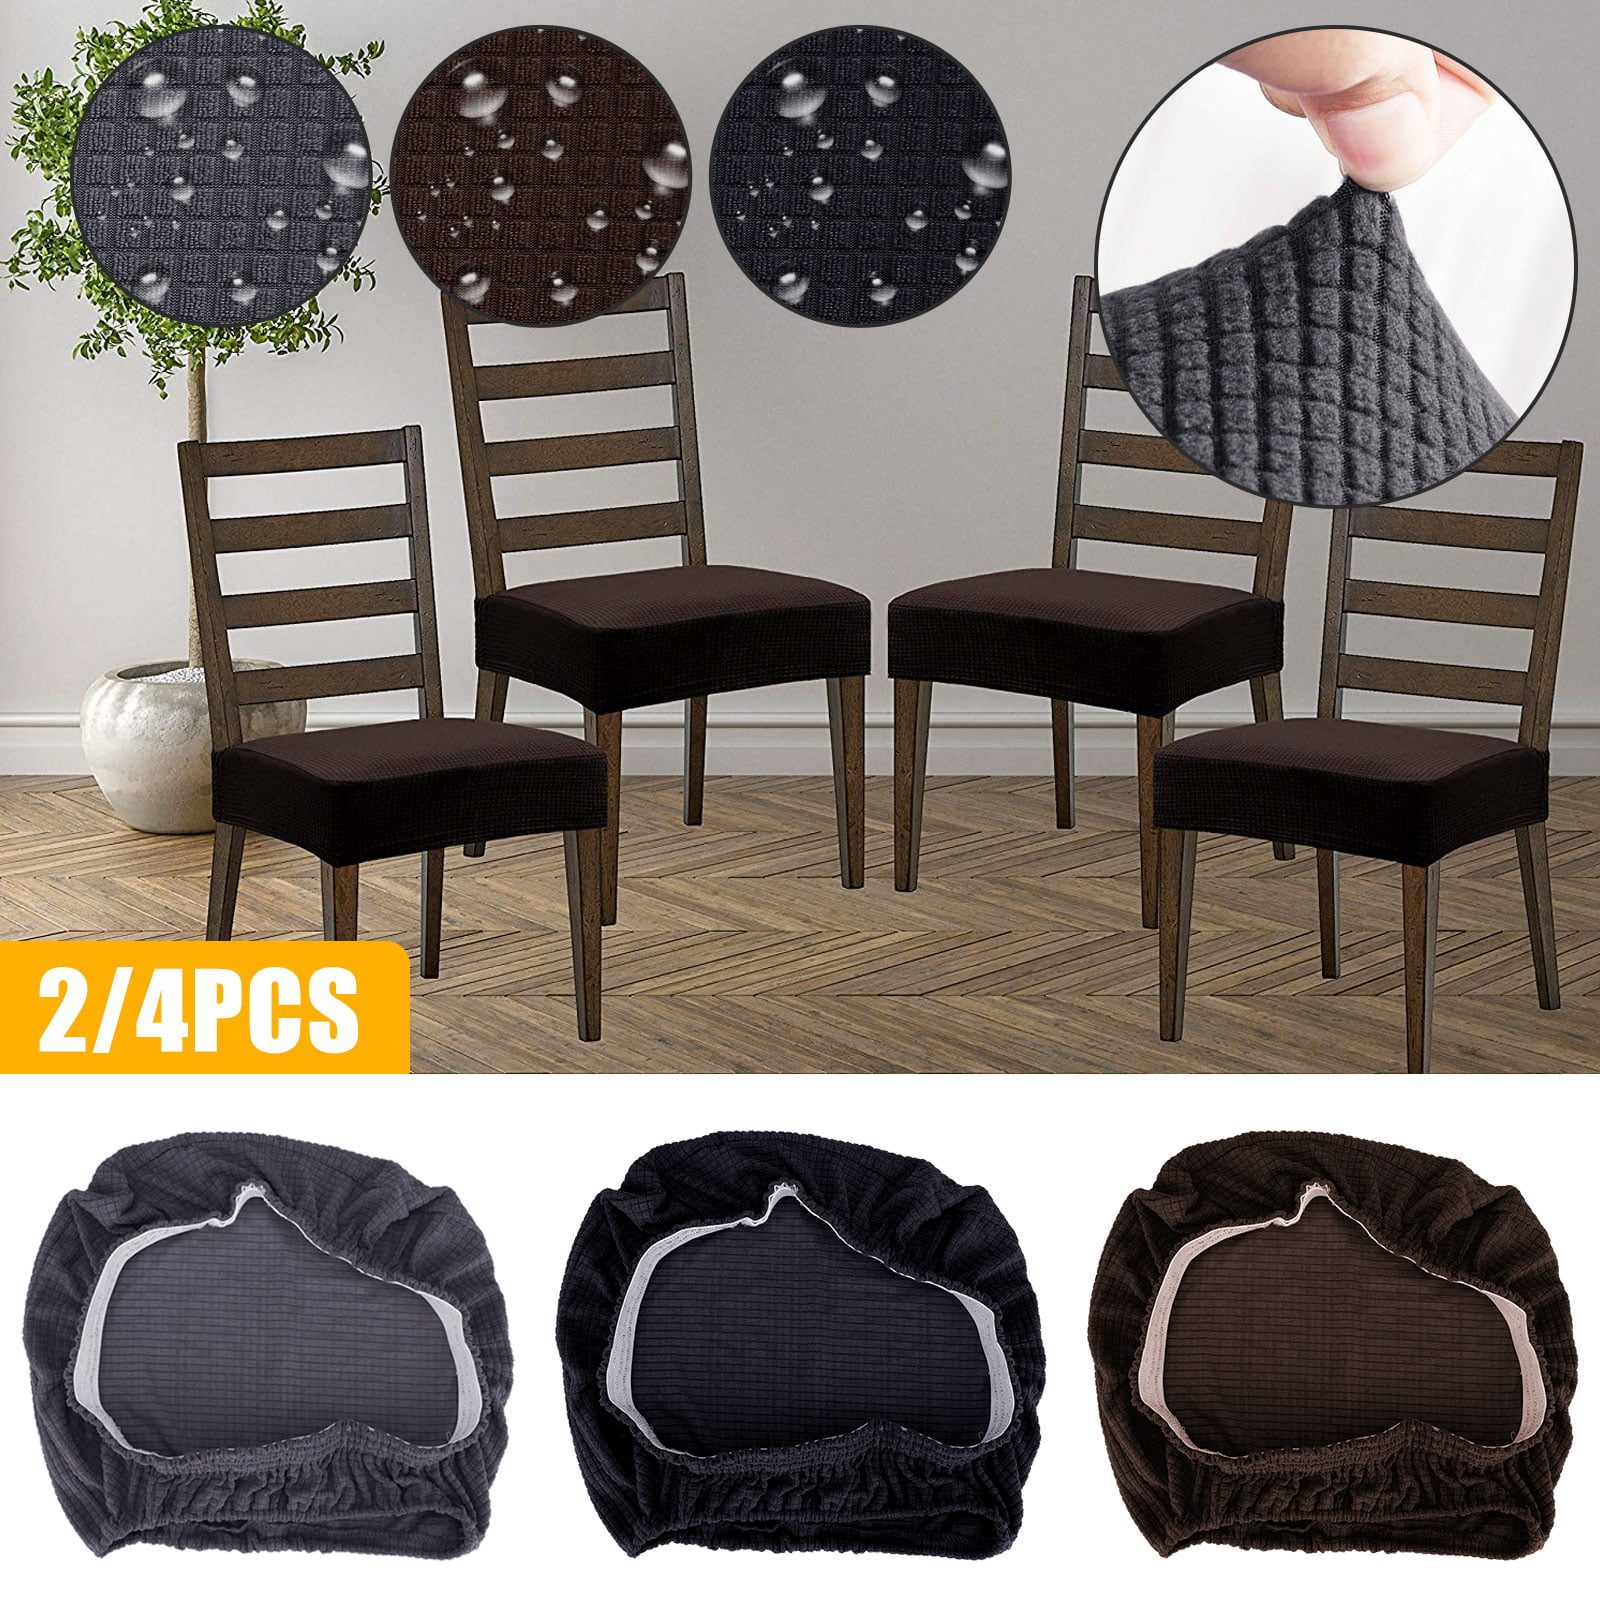 EEEkit Stretch Spandex Jacquard Dining Room Chair Seat Covers, 4/2Pcs